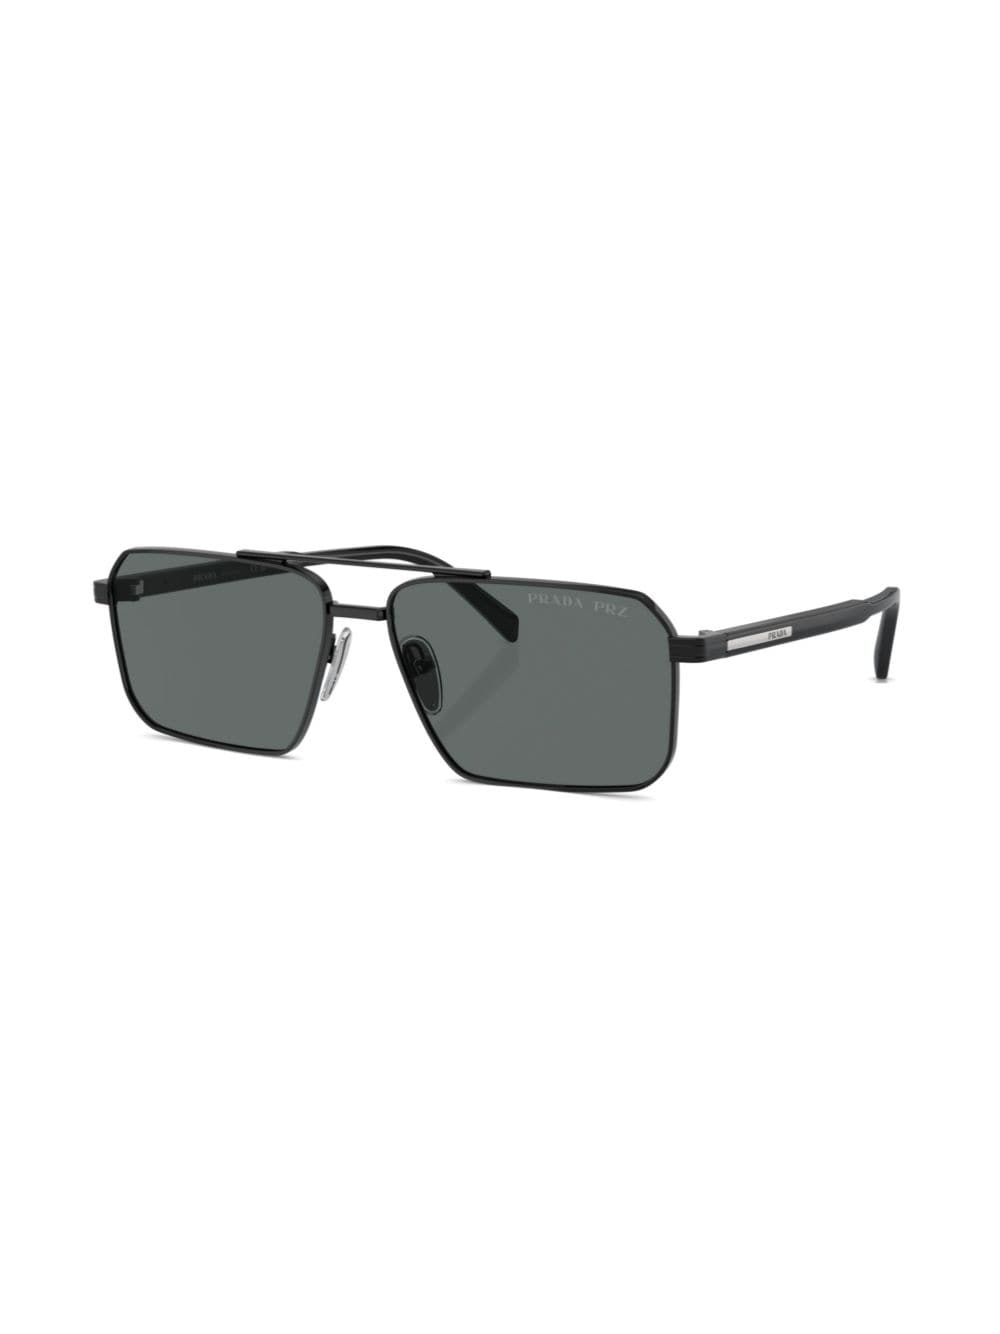 Prada Eyewear Prada PR A57S zonnebril met piloten montuur - Zwart